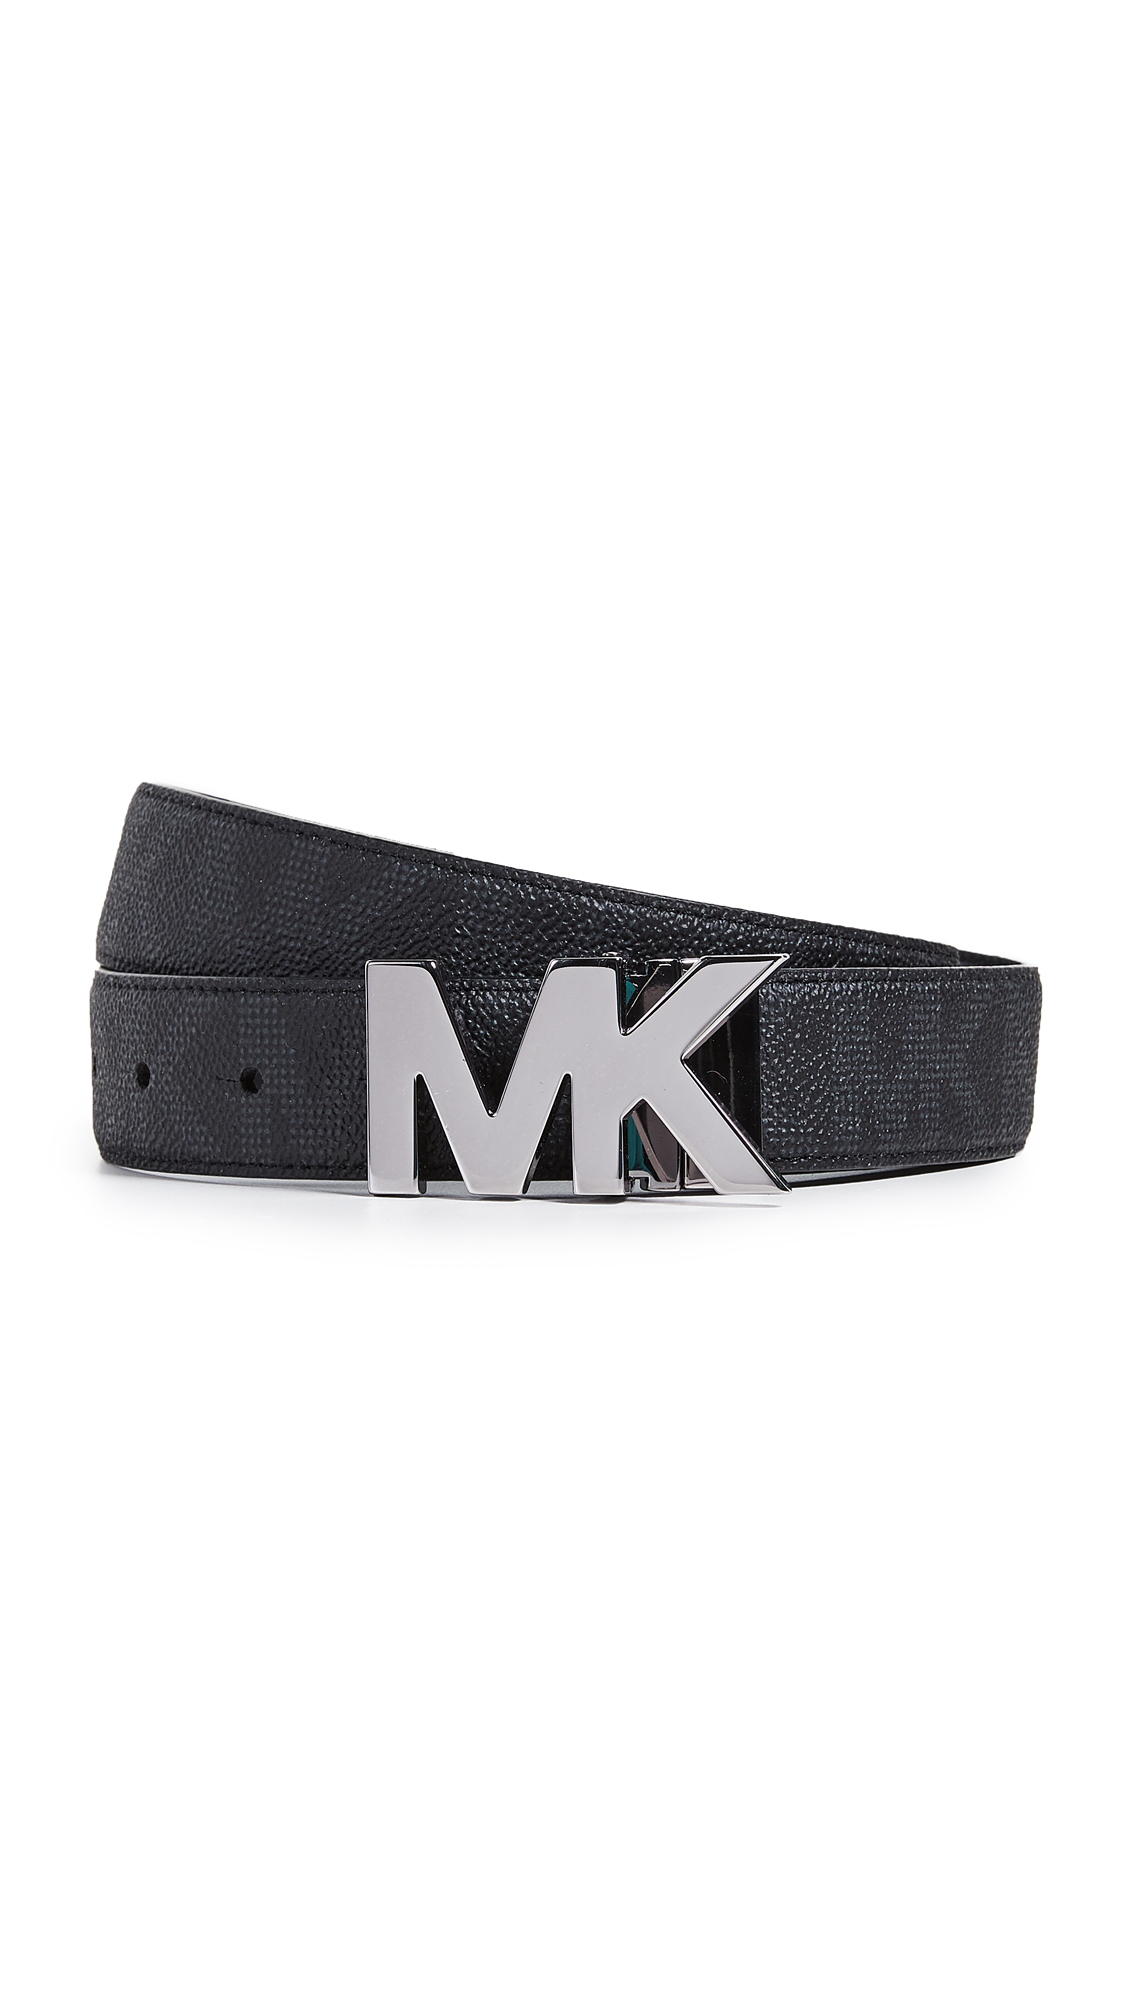 mk belts india